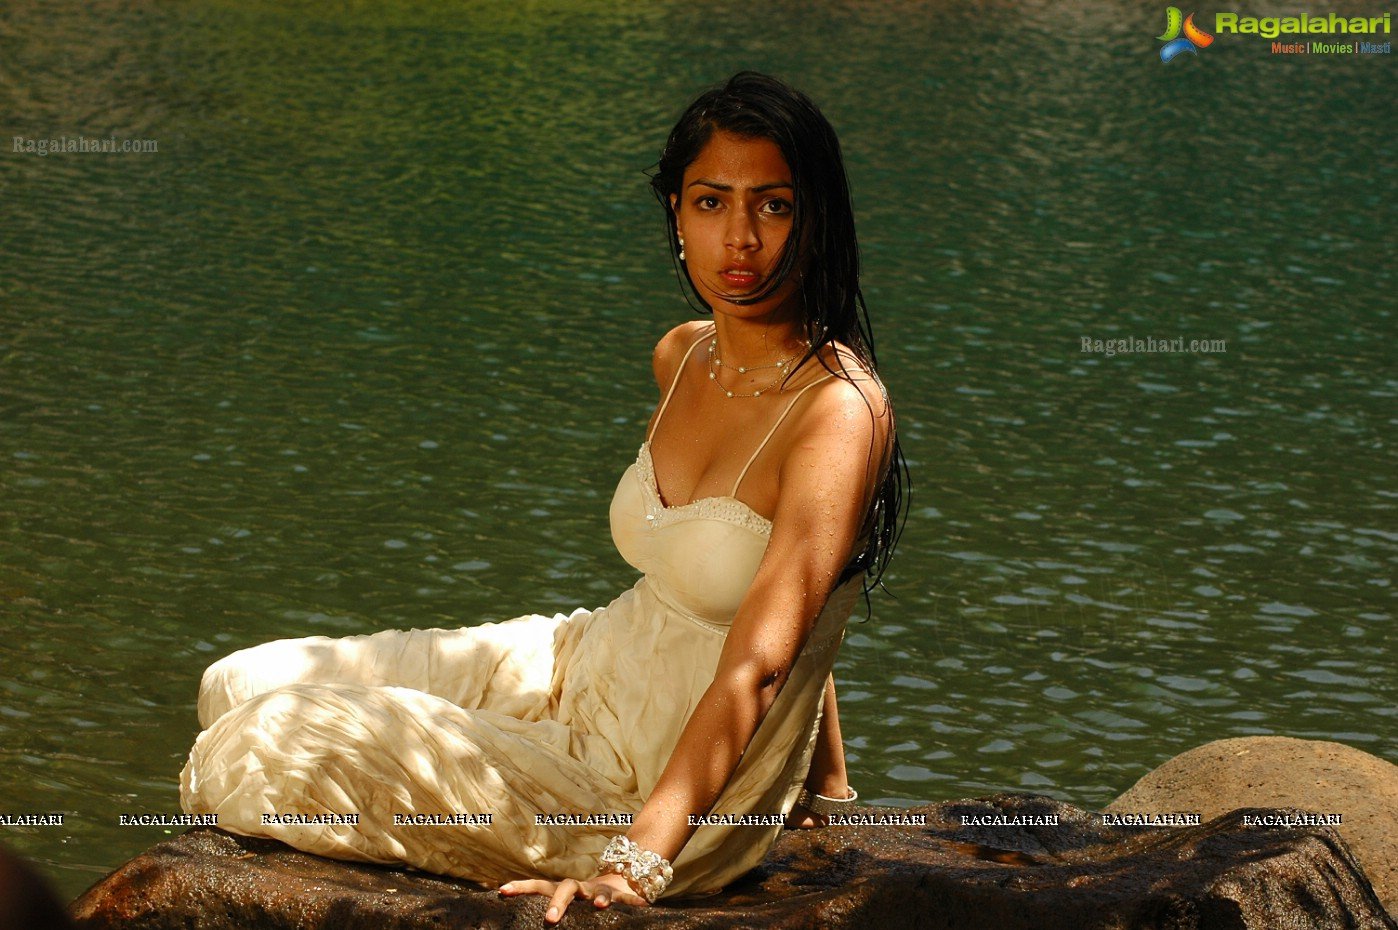 Rhea Chakravarthi in Nightgown, Photo Gallery, Images